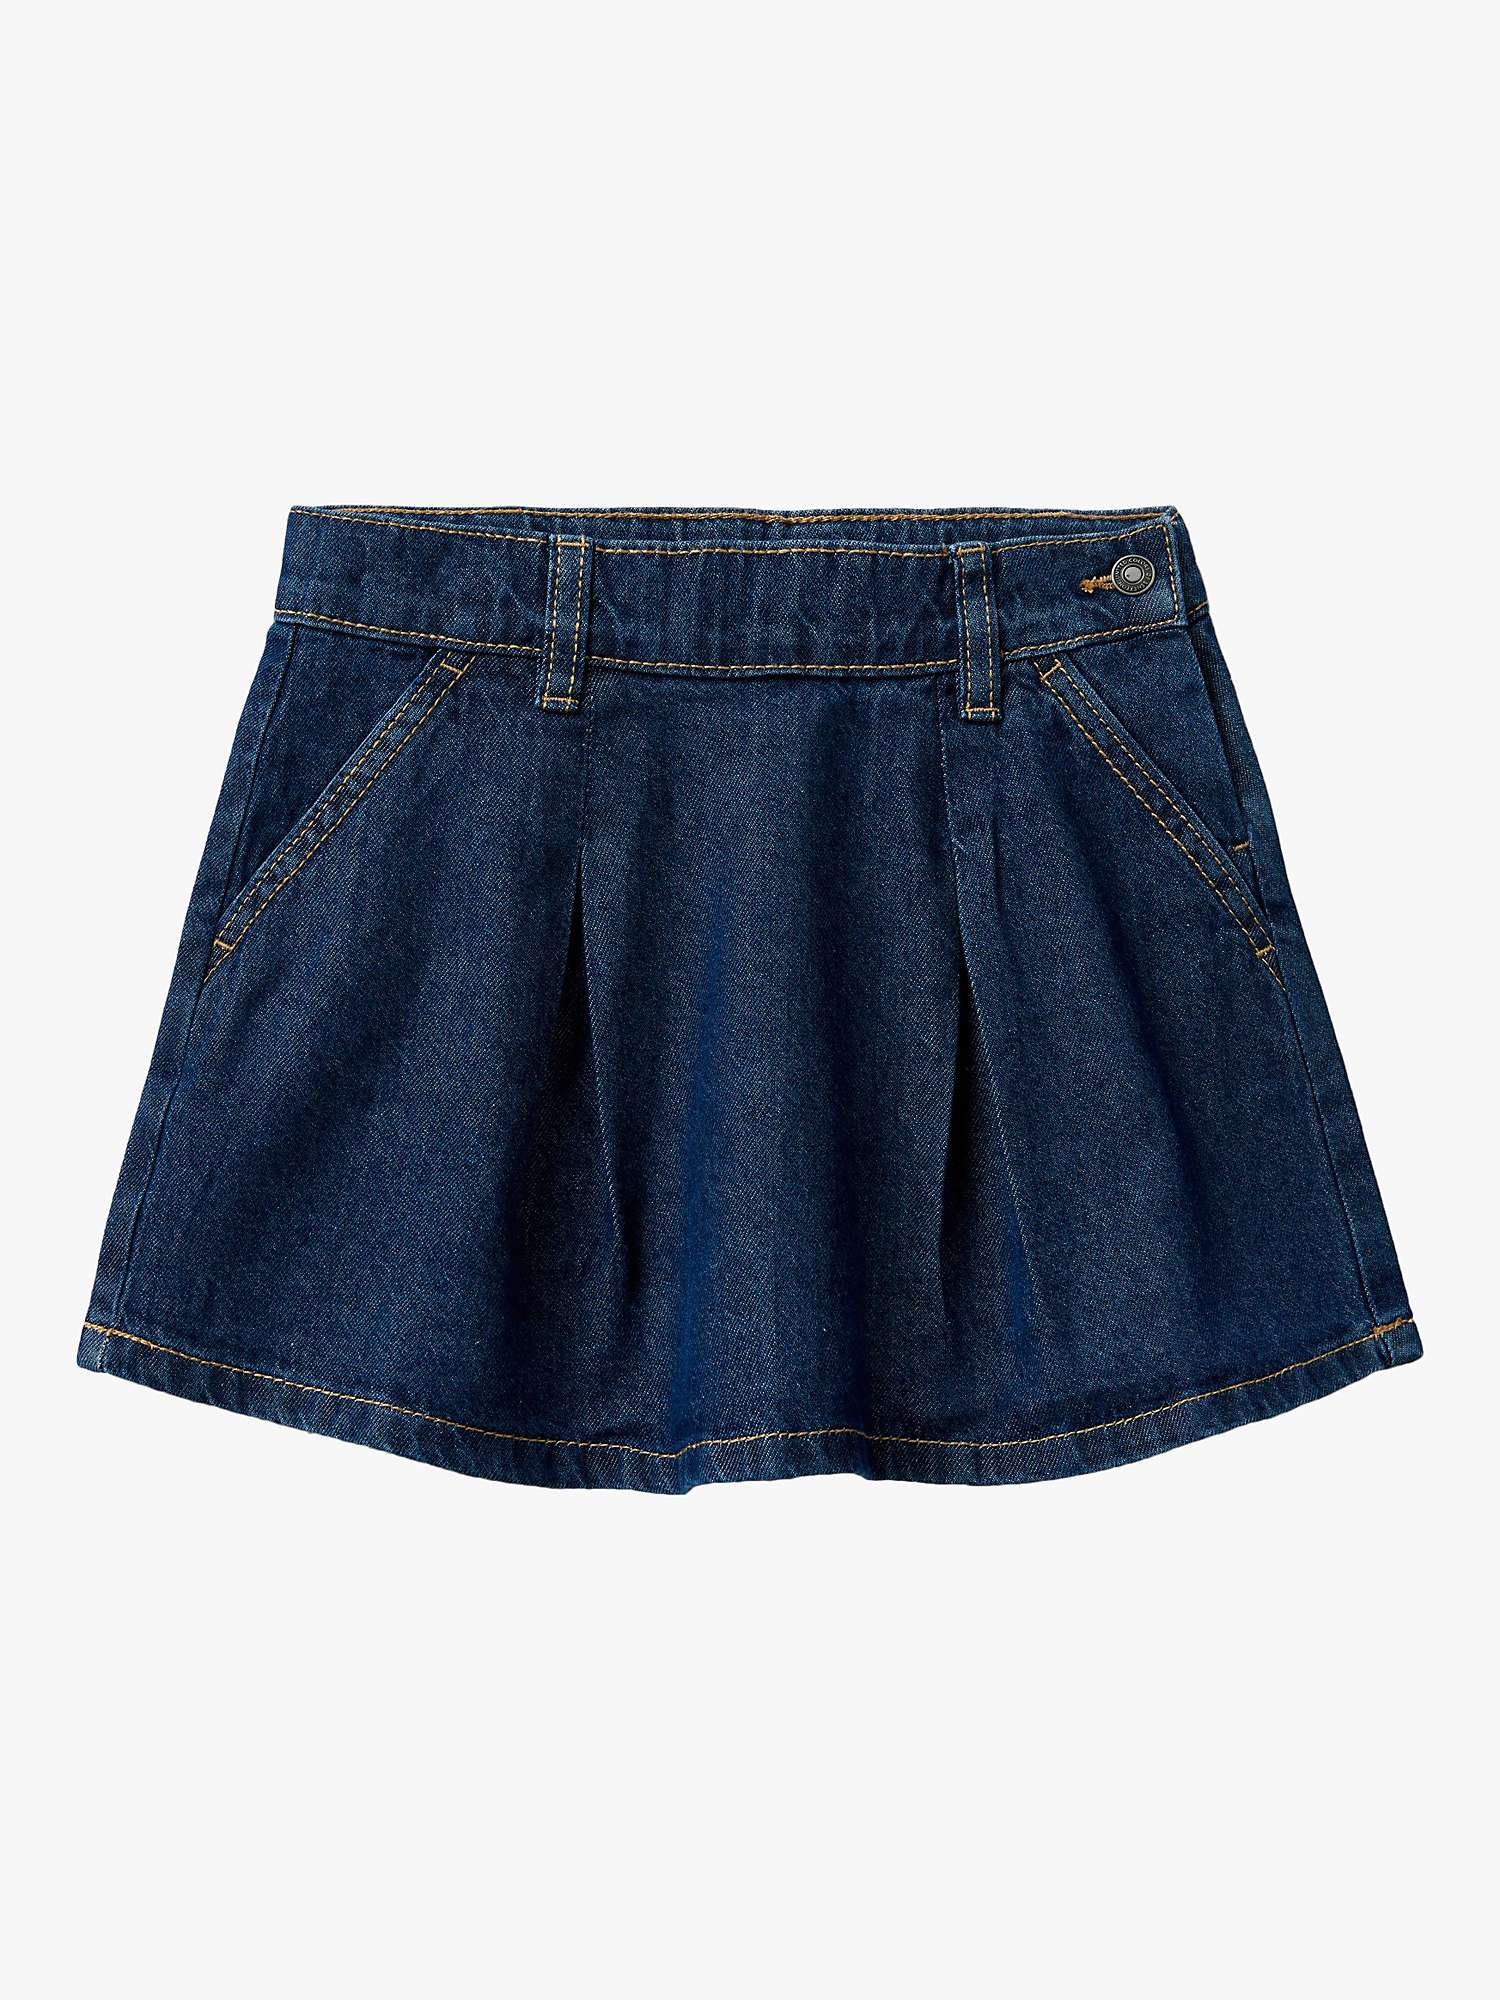 Buy Benetton Kids' Embroidered Box Pleat Denim Skirt, Blue Online at johnlewis.com